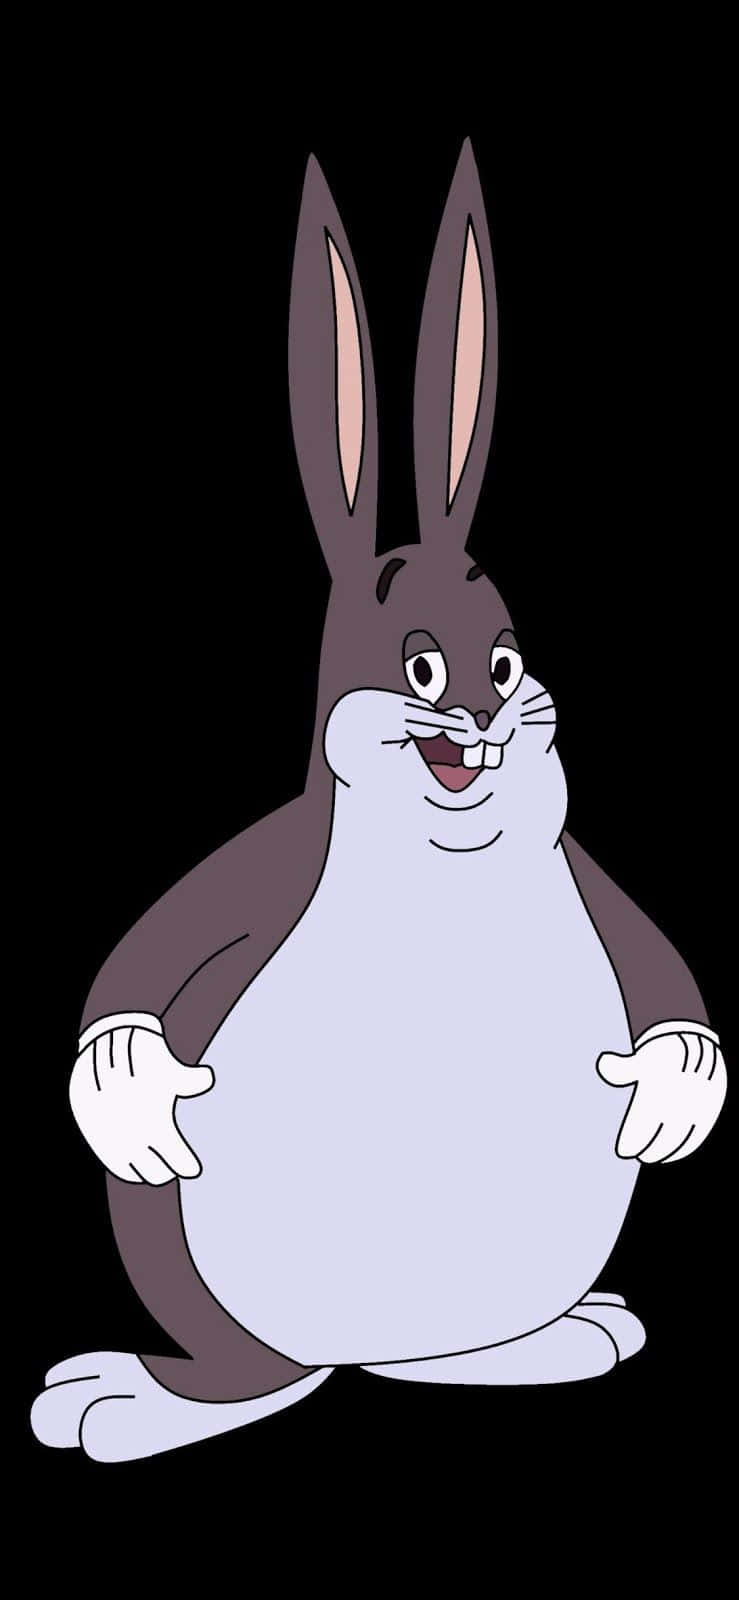 A Cartoon Rabbit With Big Ears And Big Feet Background